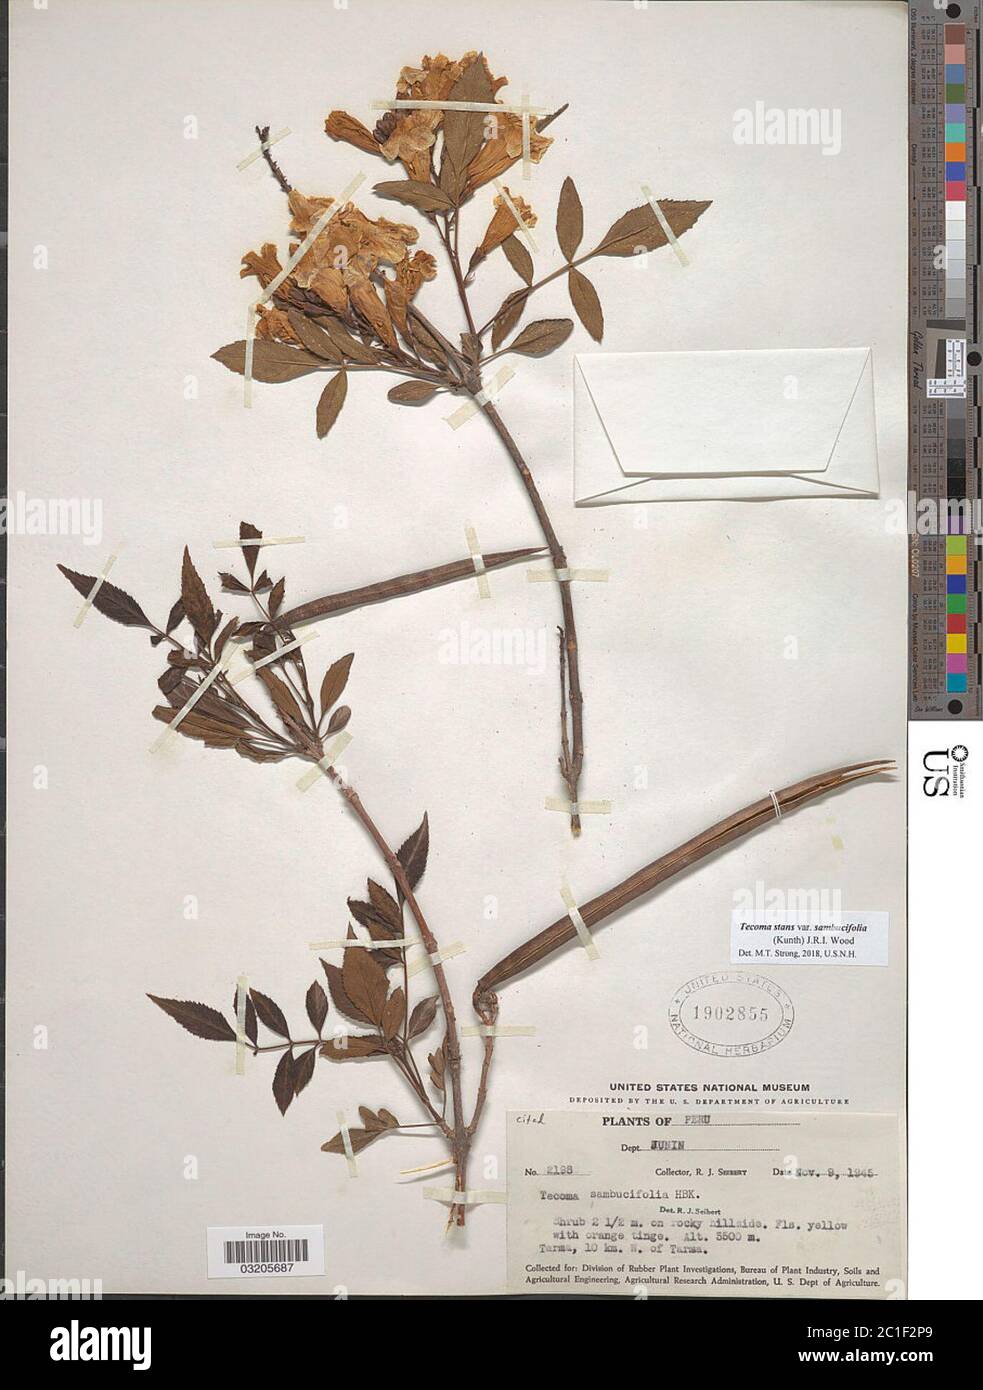 Tecoma stans var sambucifolia Kunth JRI Wood Tecoma stans var sambucifolia Kunth JRI Wood. Stock Photo